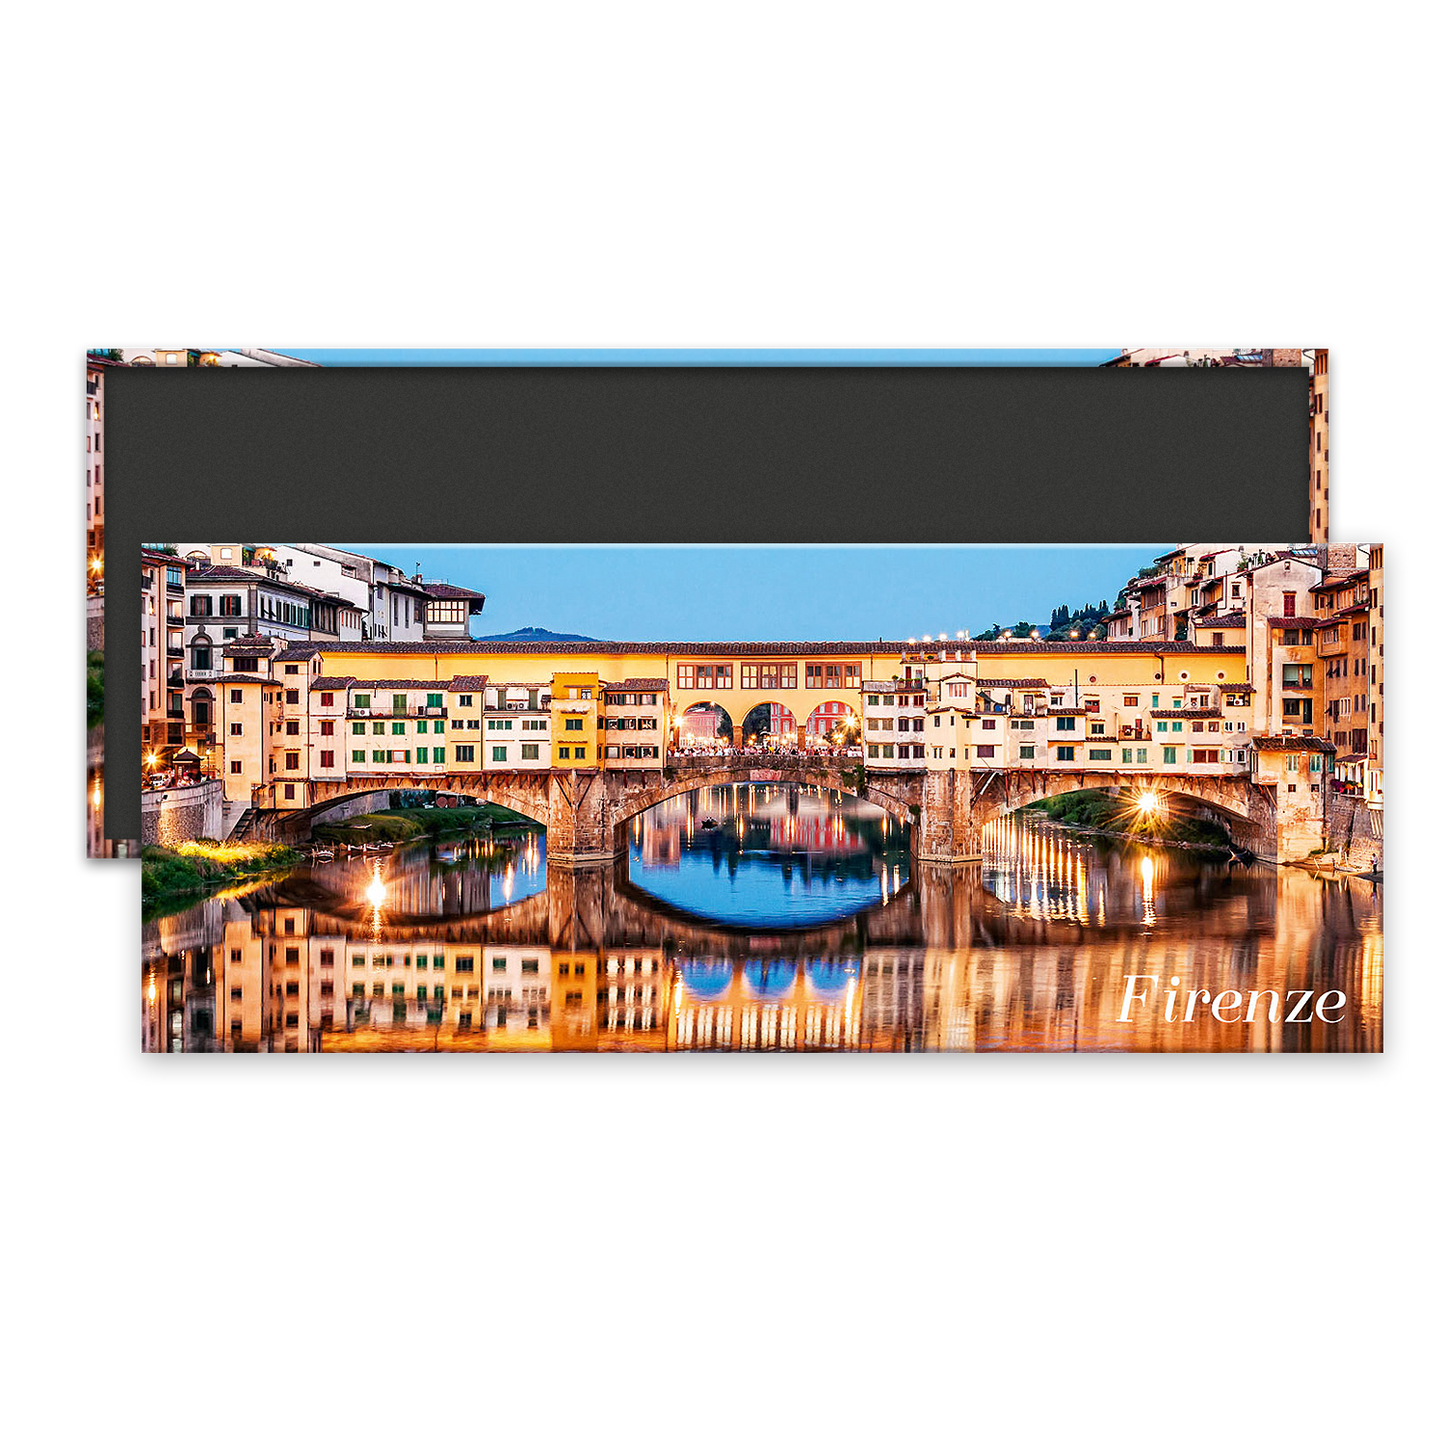 FI M 074 – Florenz, Ponte Vecchio